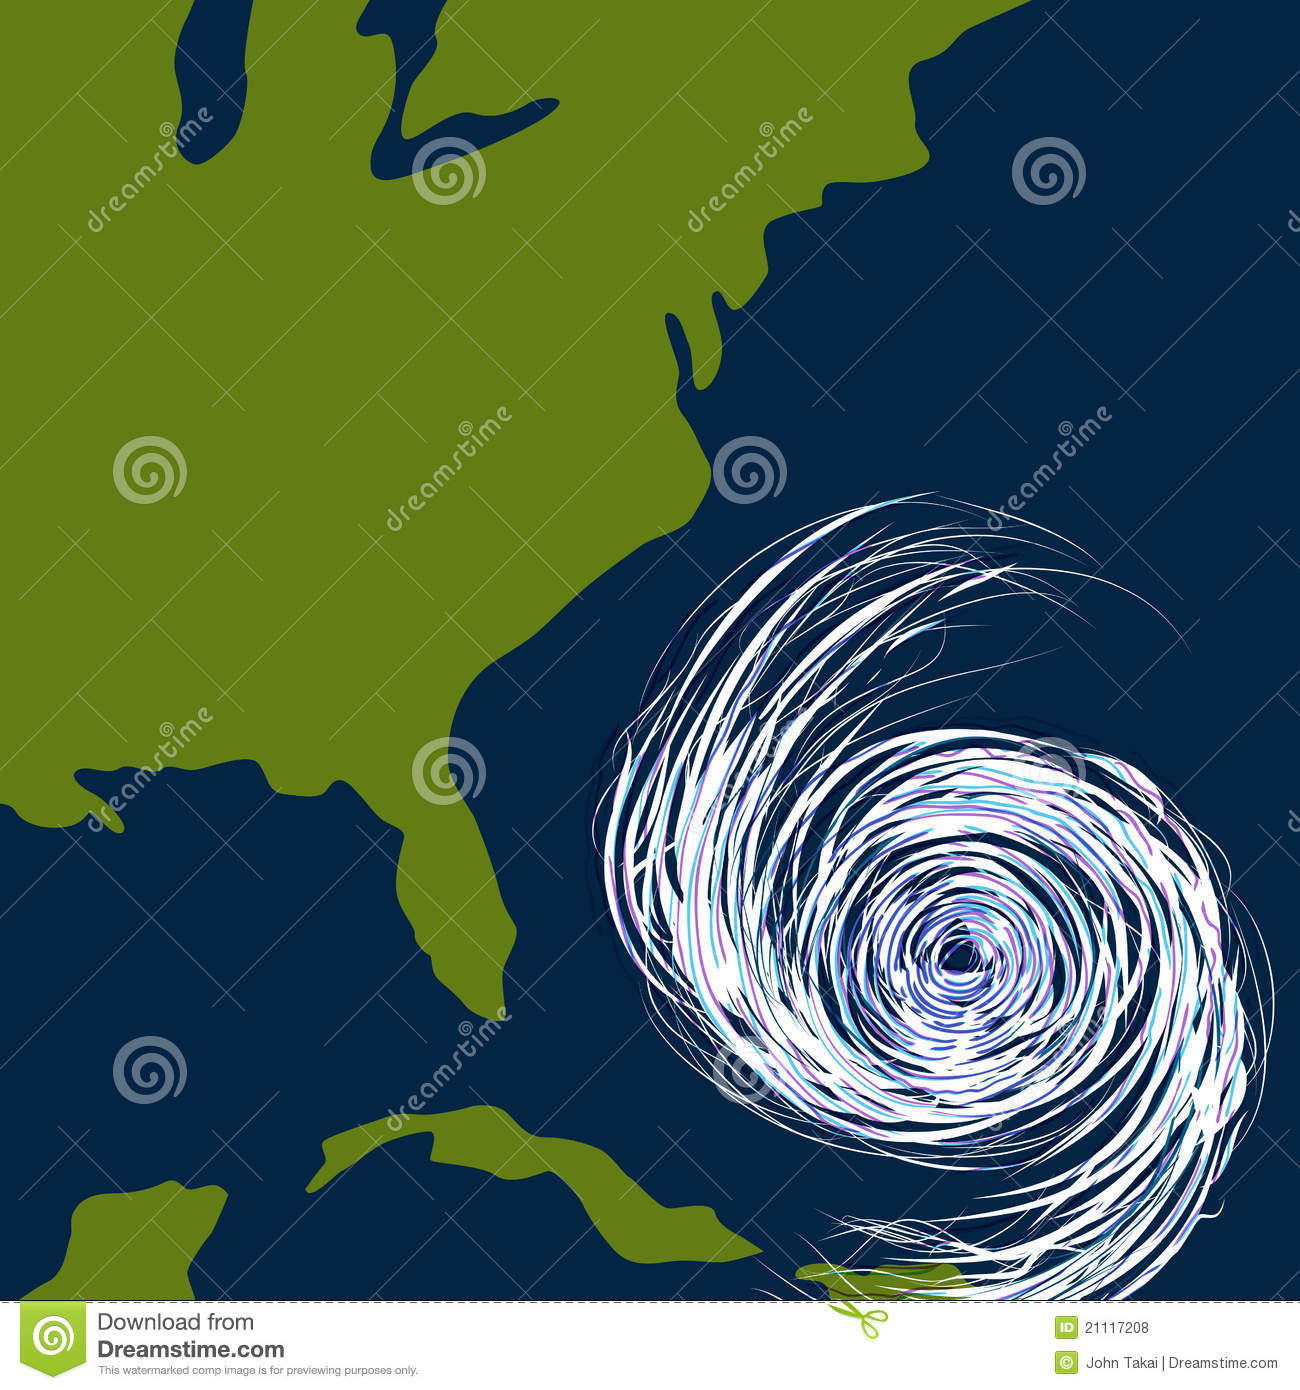 East Coast Hurricane Drawing Royalty Free Stock Photos   Image